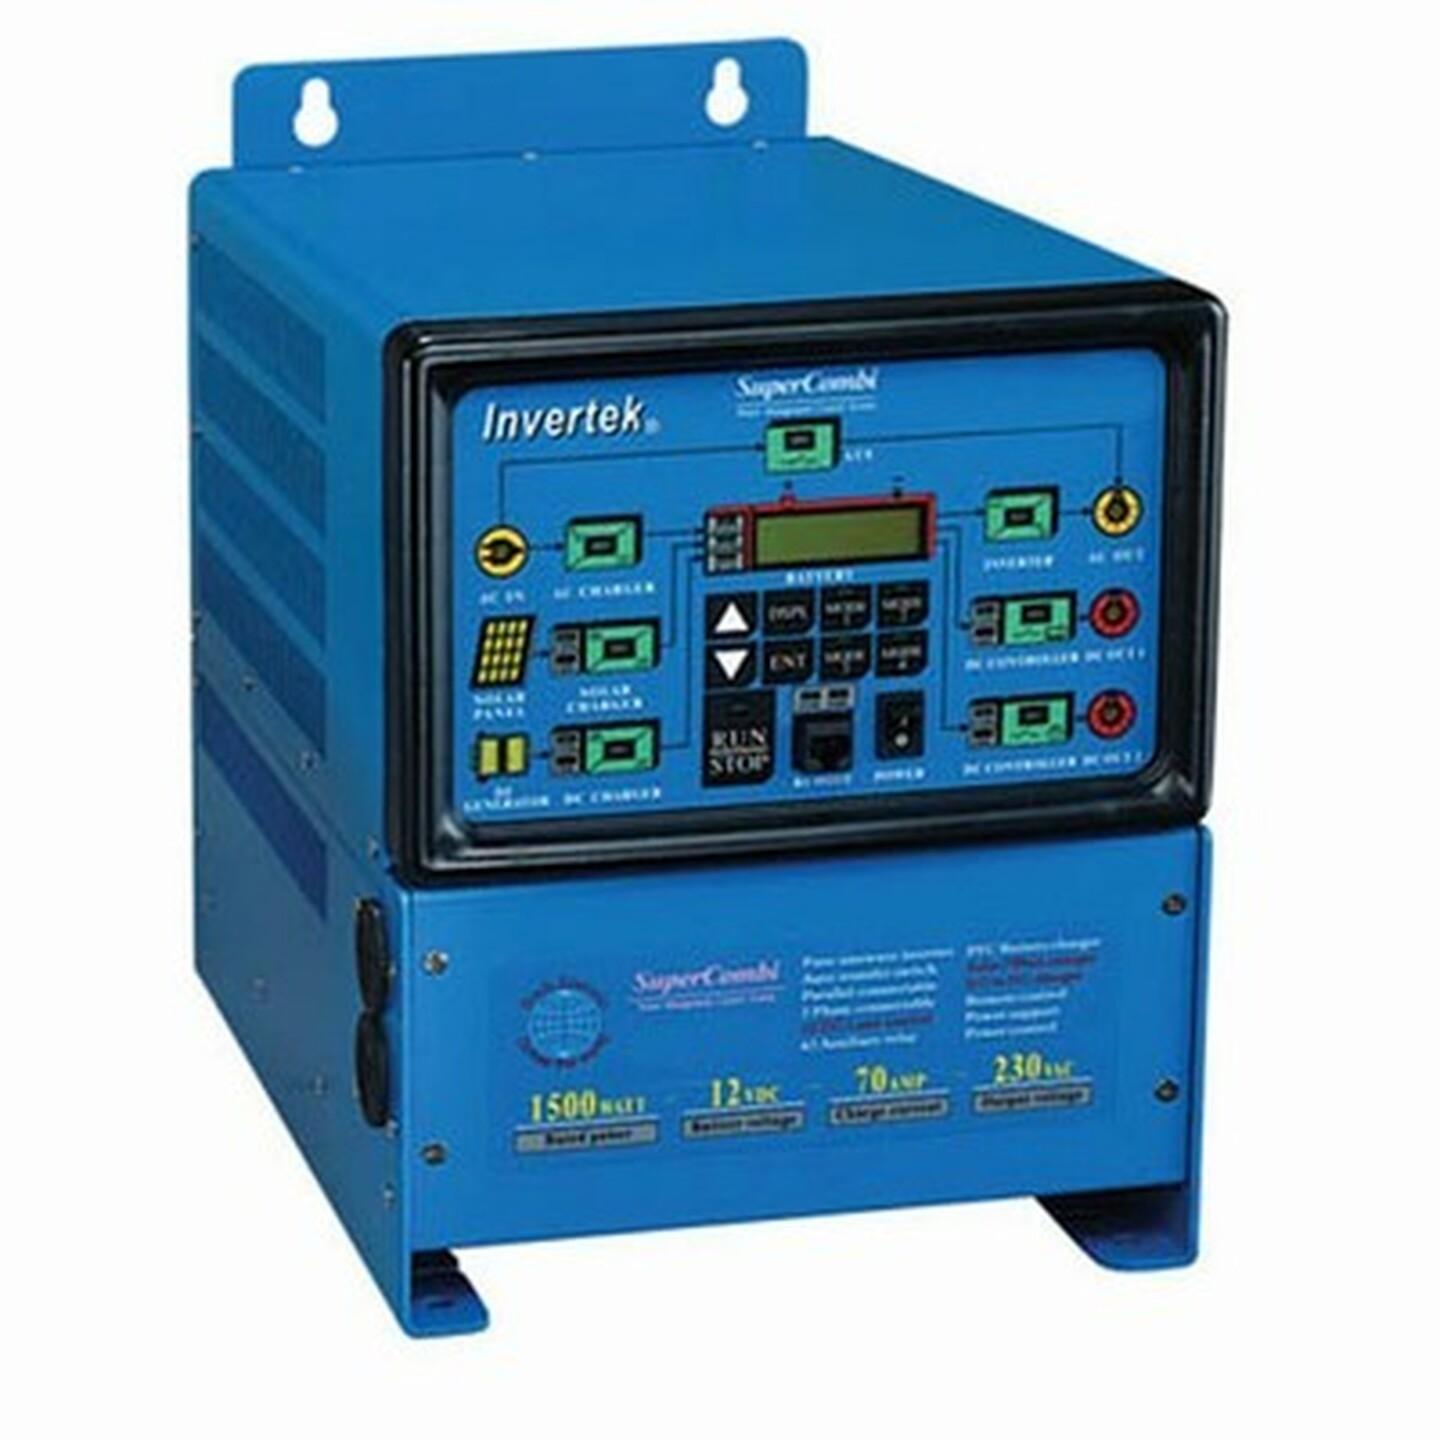 SuperCombi Power Management System 12V 3000W